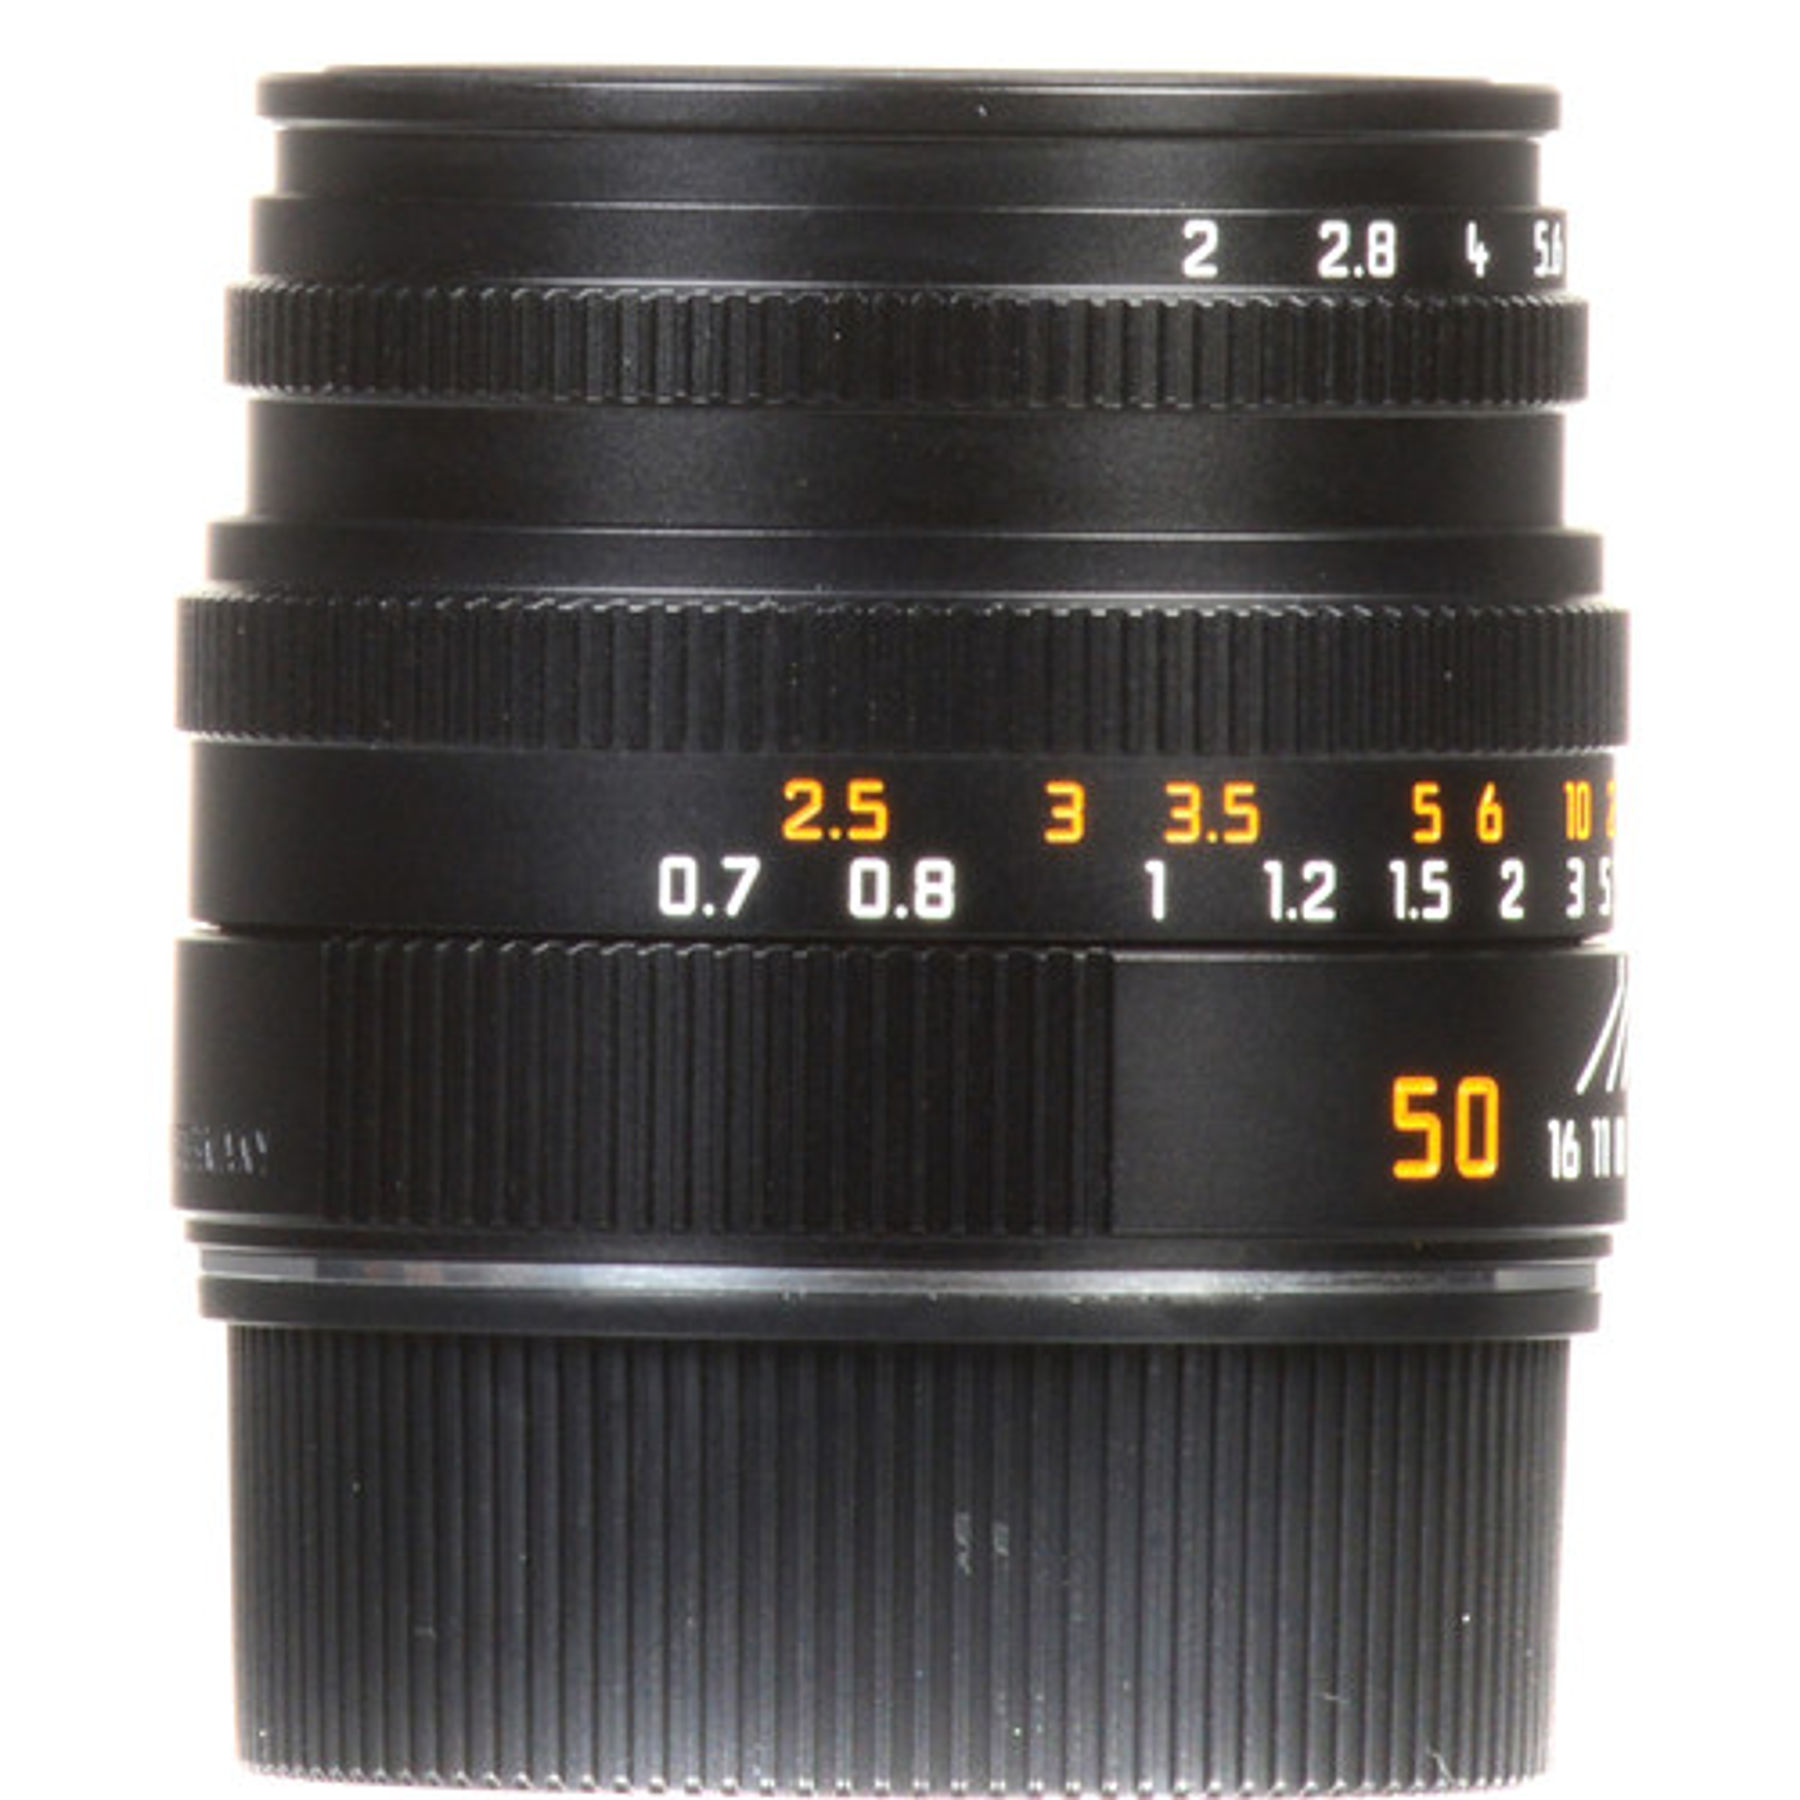 Leica Summicron-M 50mm f/2